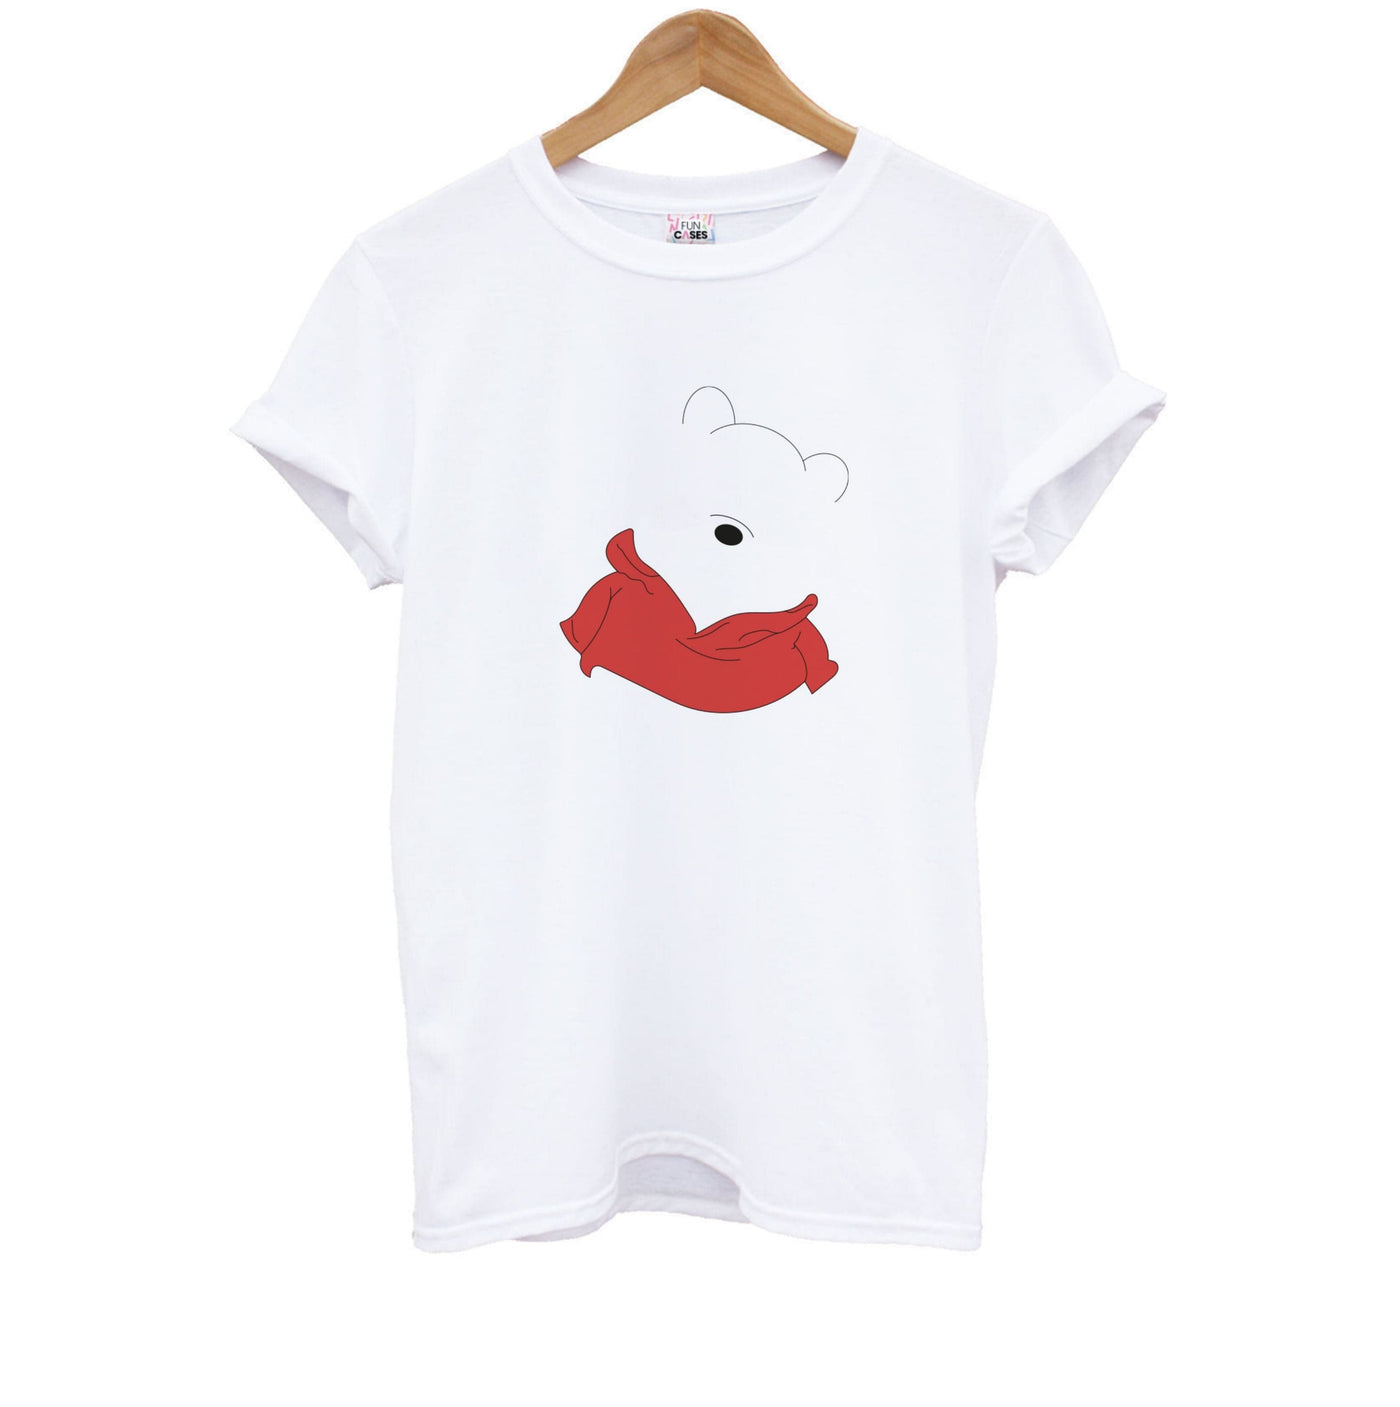 Faceless Winnie The Pooh Kids T-Shirt